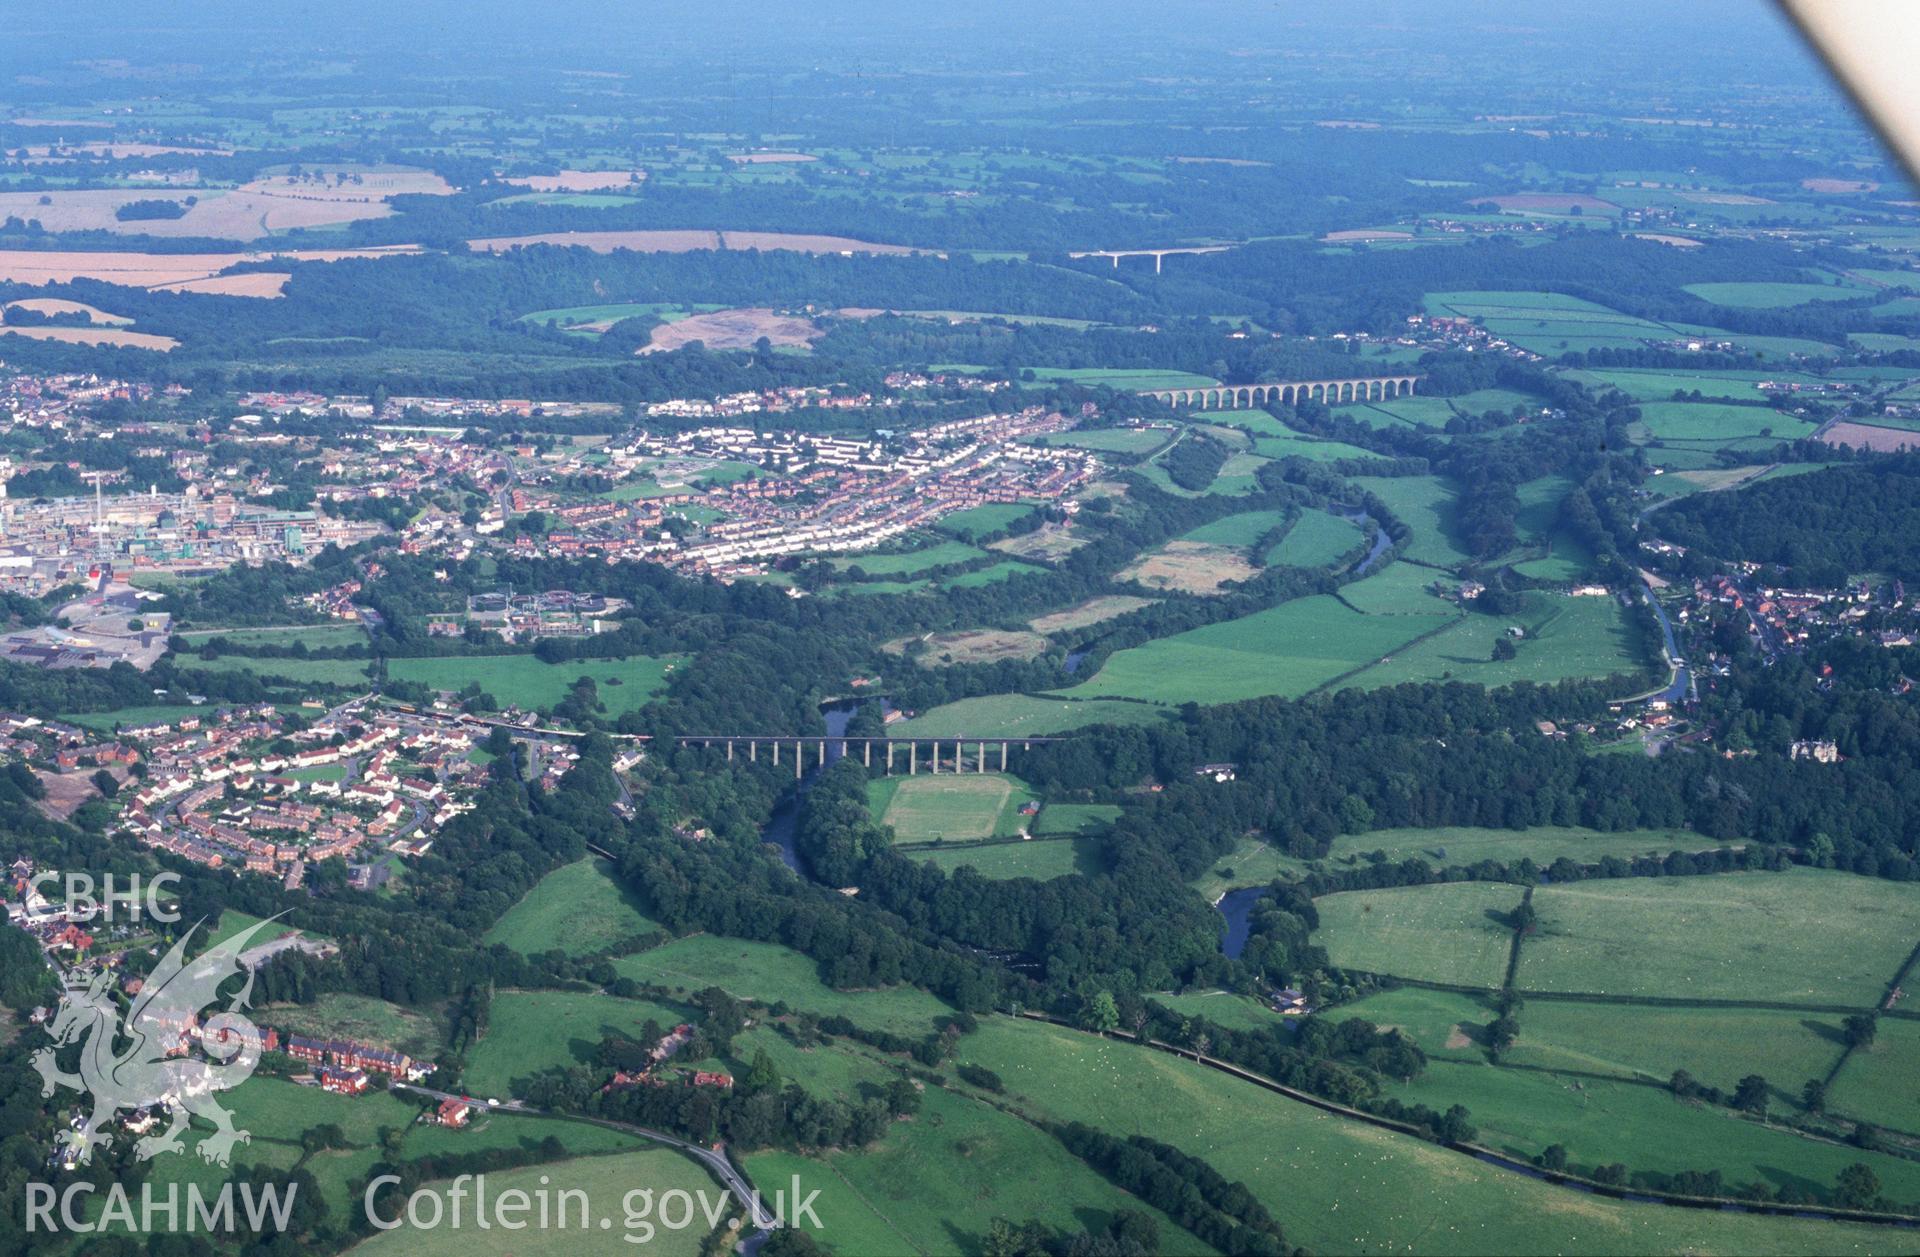 Slide of RCAHMW colour oblique aerial photograph of Llangollen, taken by T.G. Driver, 30/8/2000.